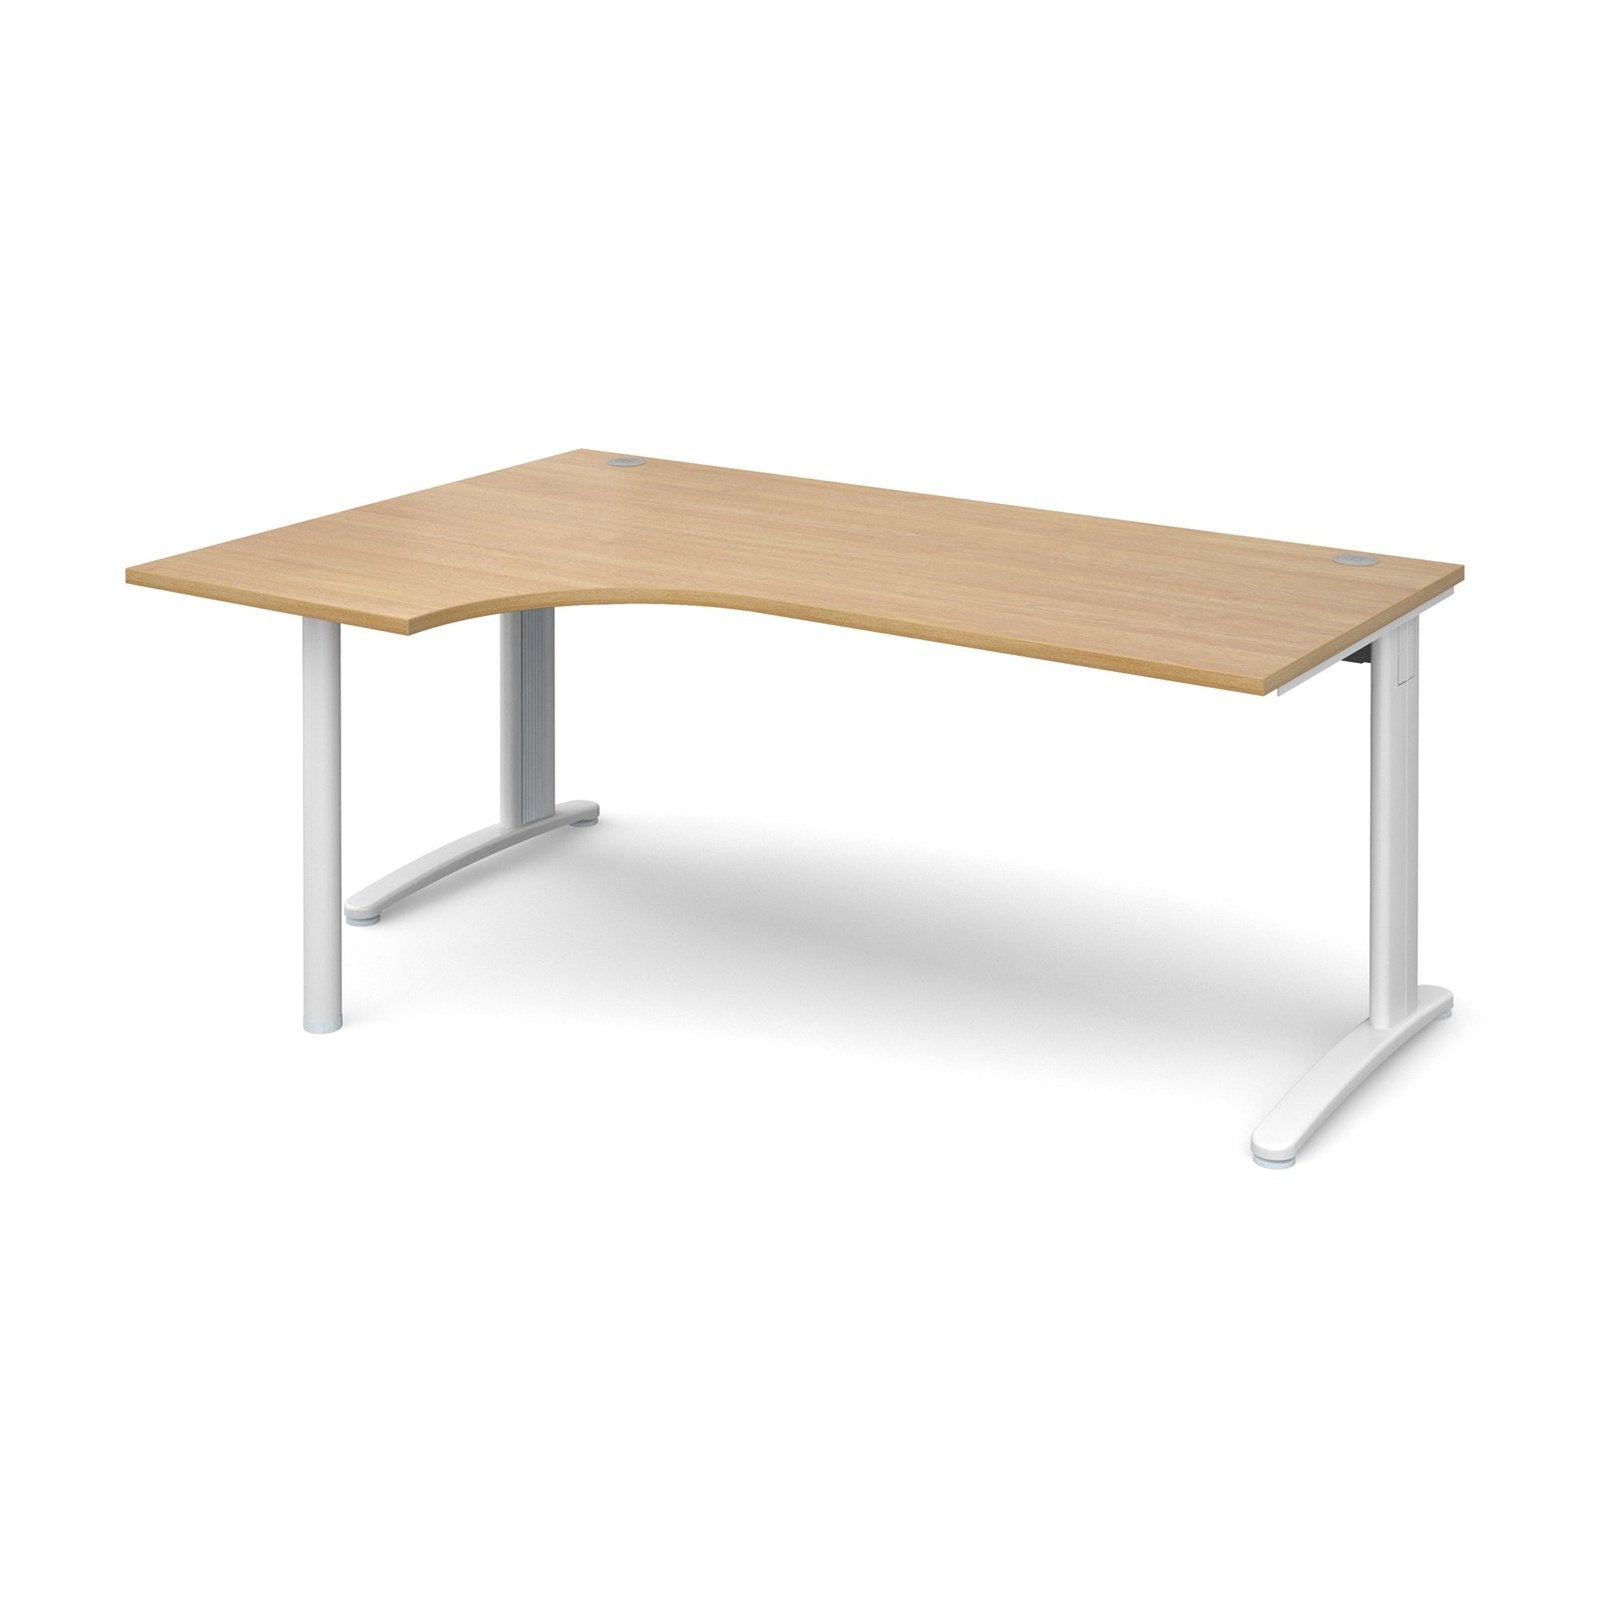 TR10 left hand ergonomic desk - Office Products Online